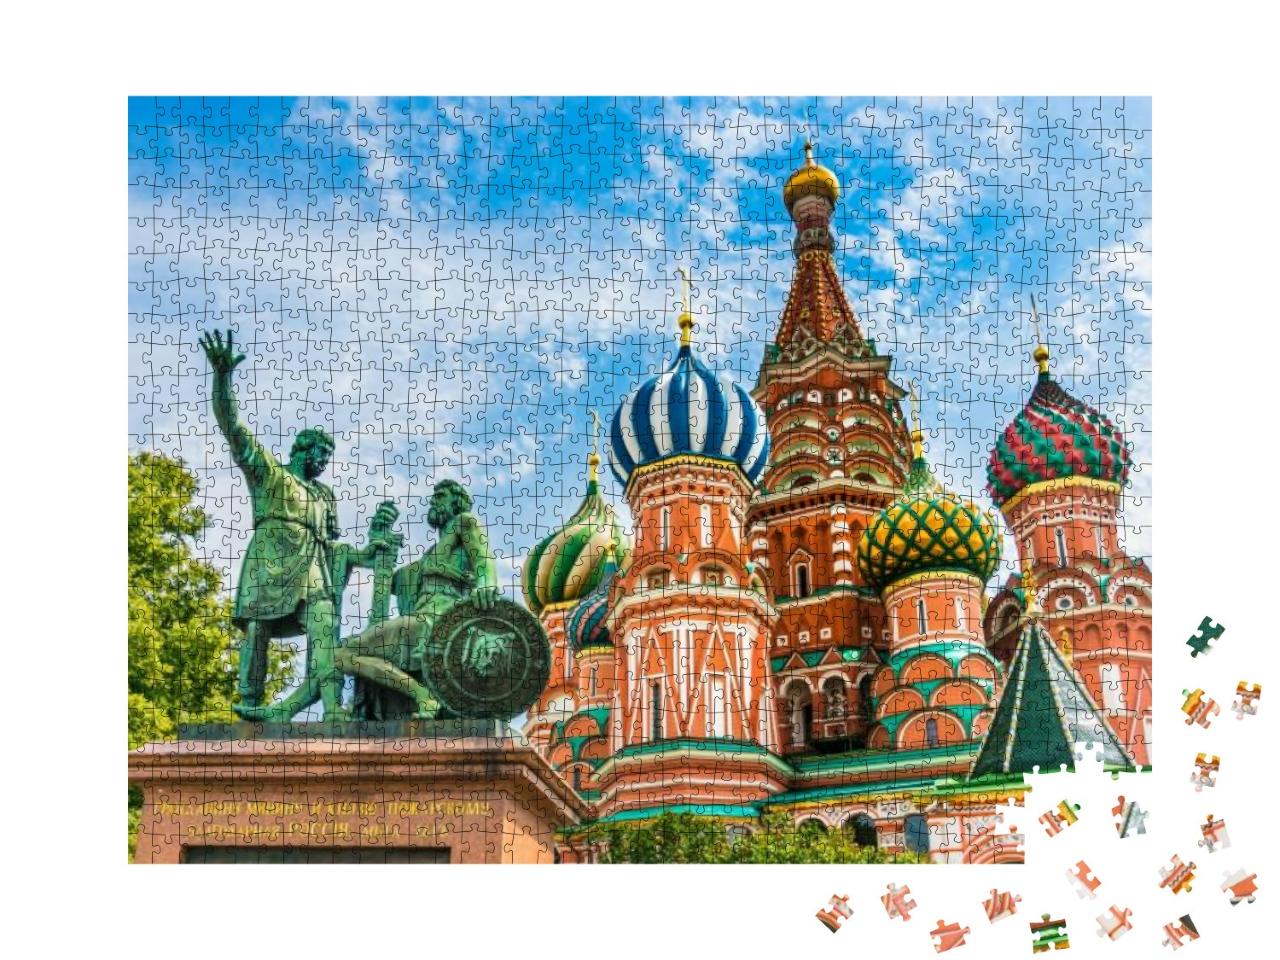 Puzzle 1000 Teile „Basilius-Kathedrale auf dem Roten Platz in Moskau, Russland“